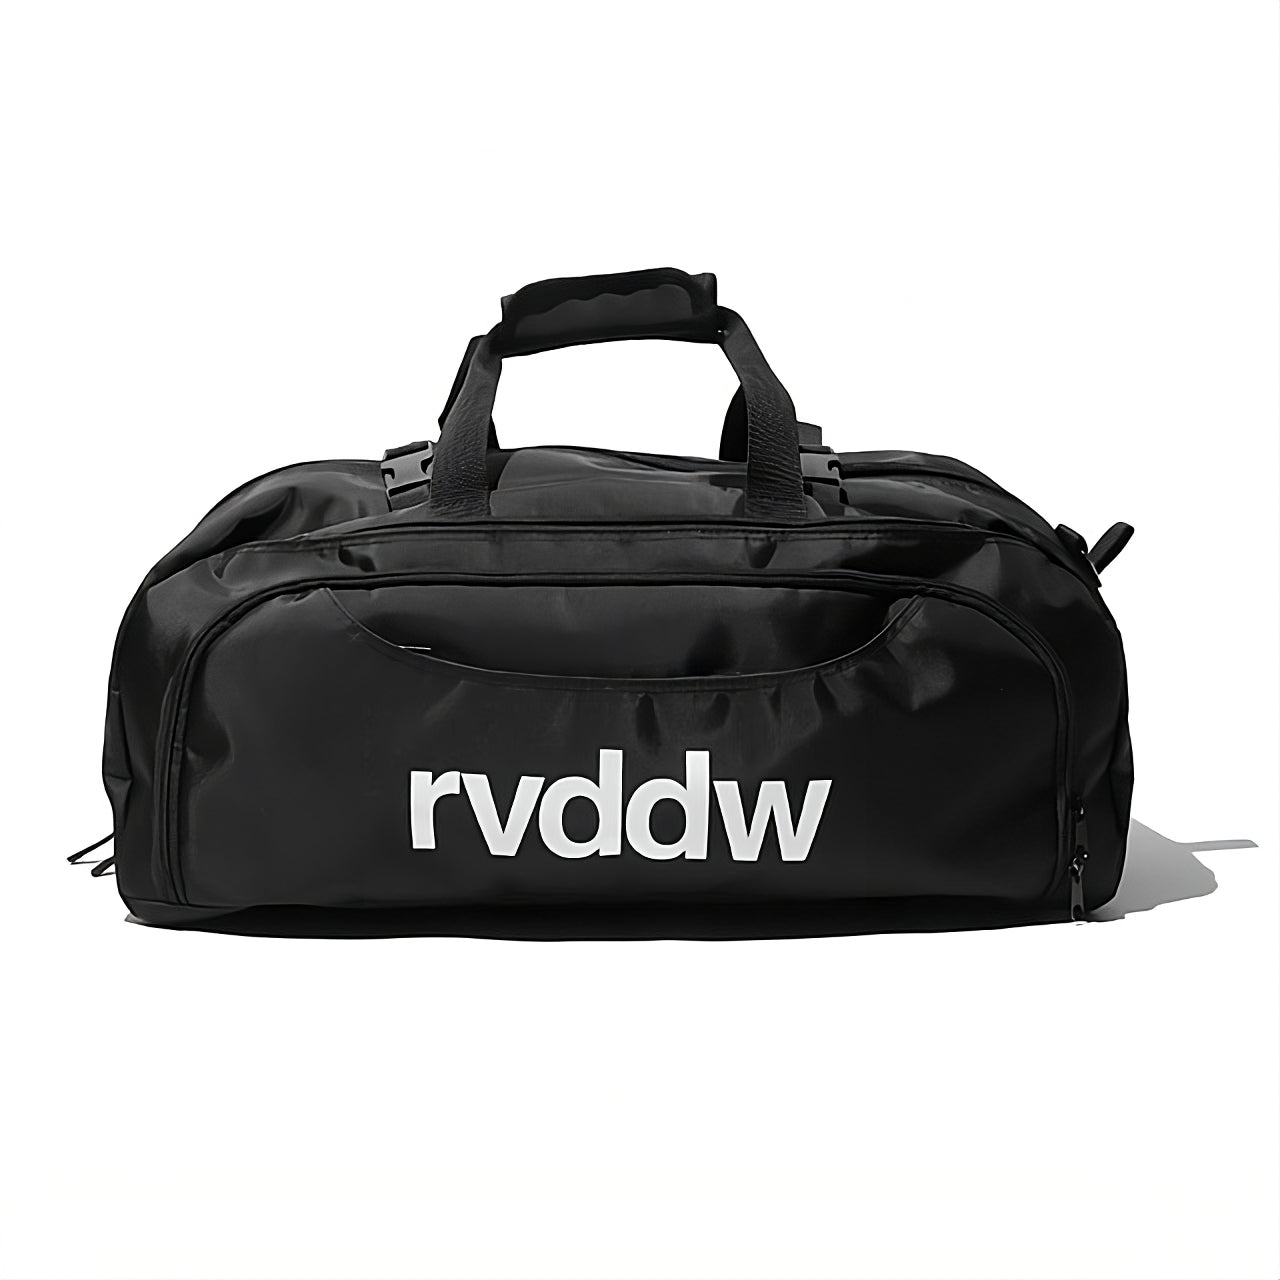 RVDDW 3-Way Bag-Reversal RVDDW-ChokeSports